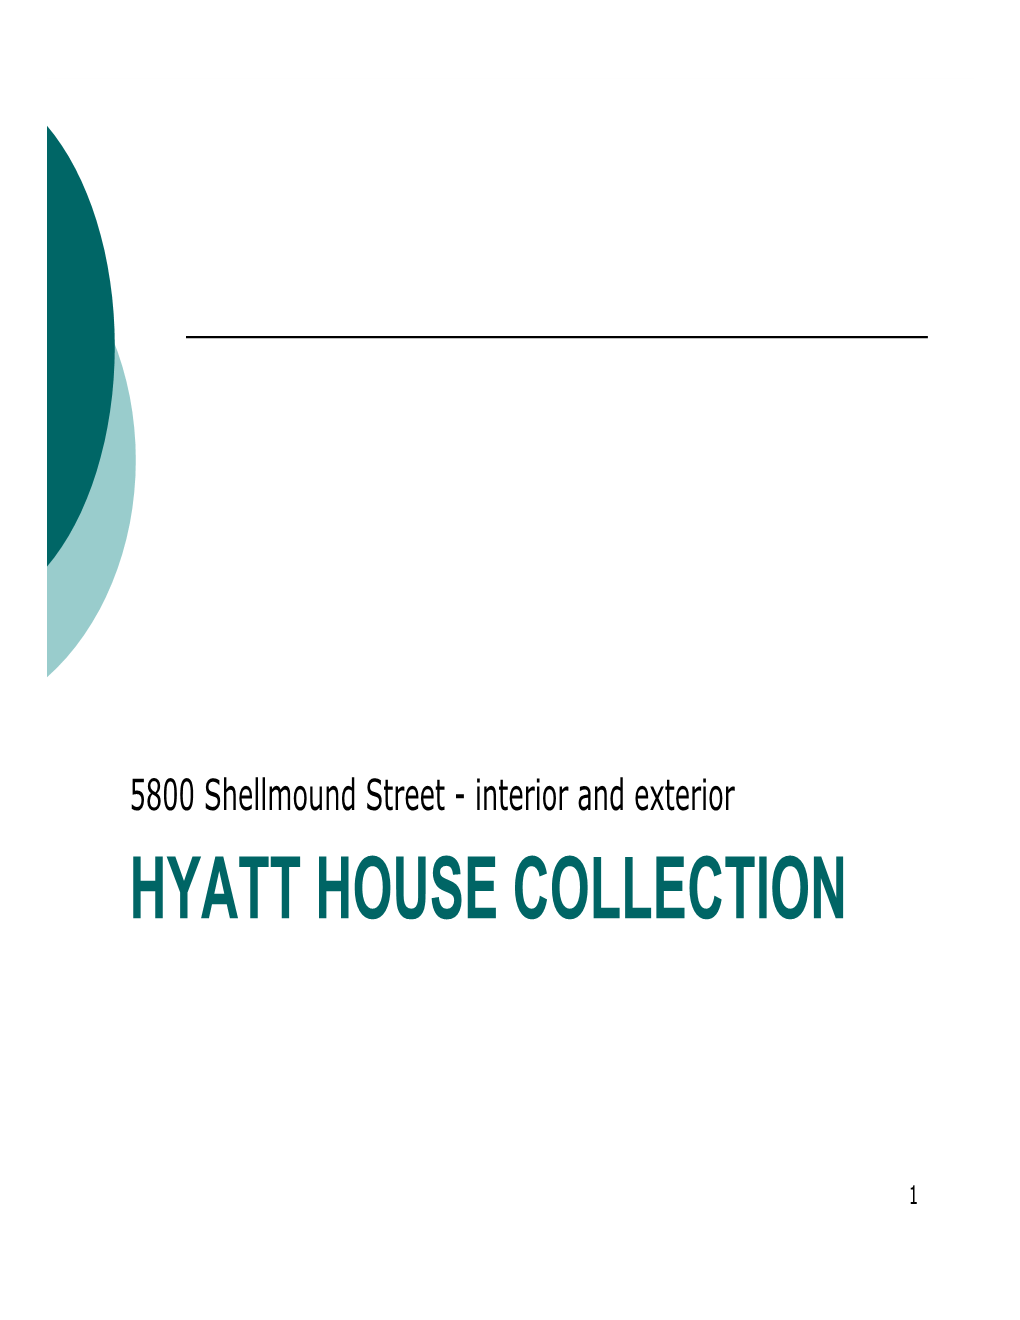 Hyatt House Collection